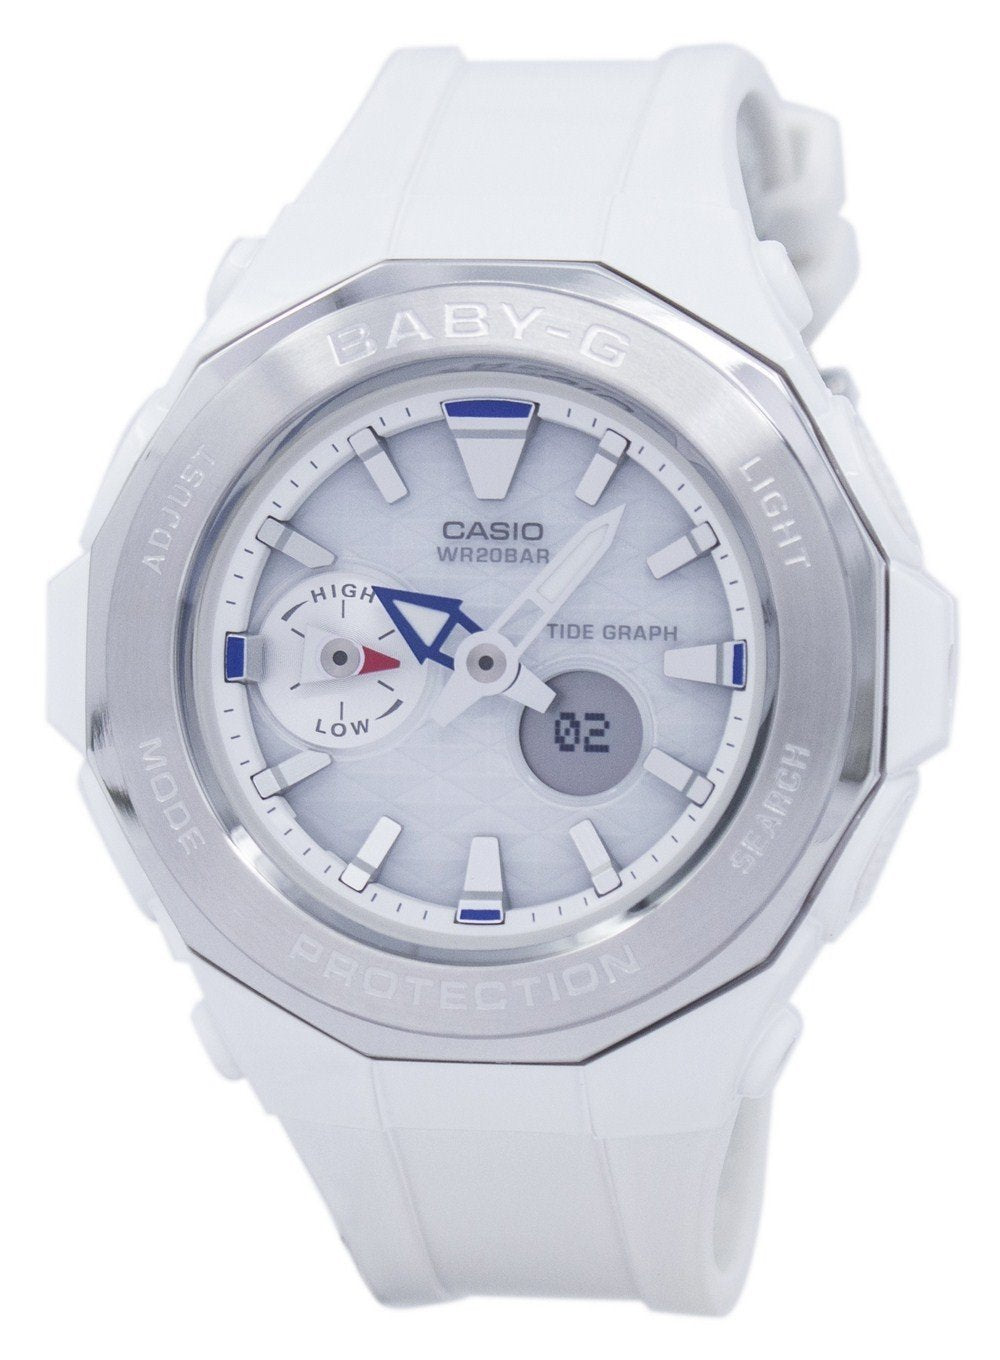 Casio Baby-G watch model BGA-225-7A